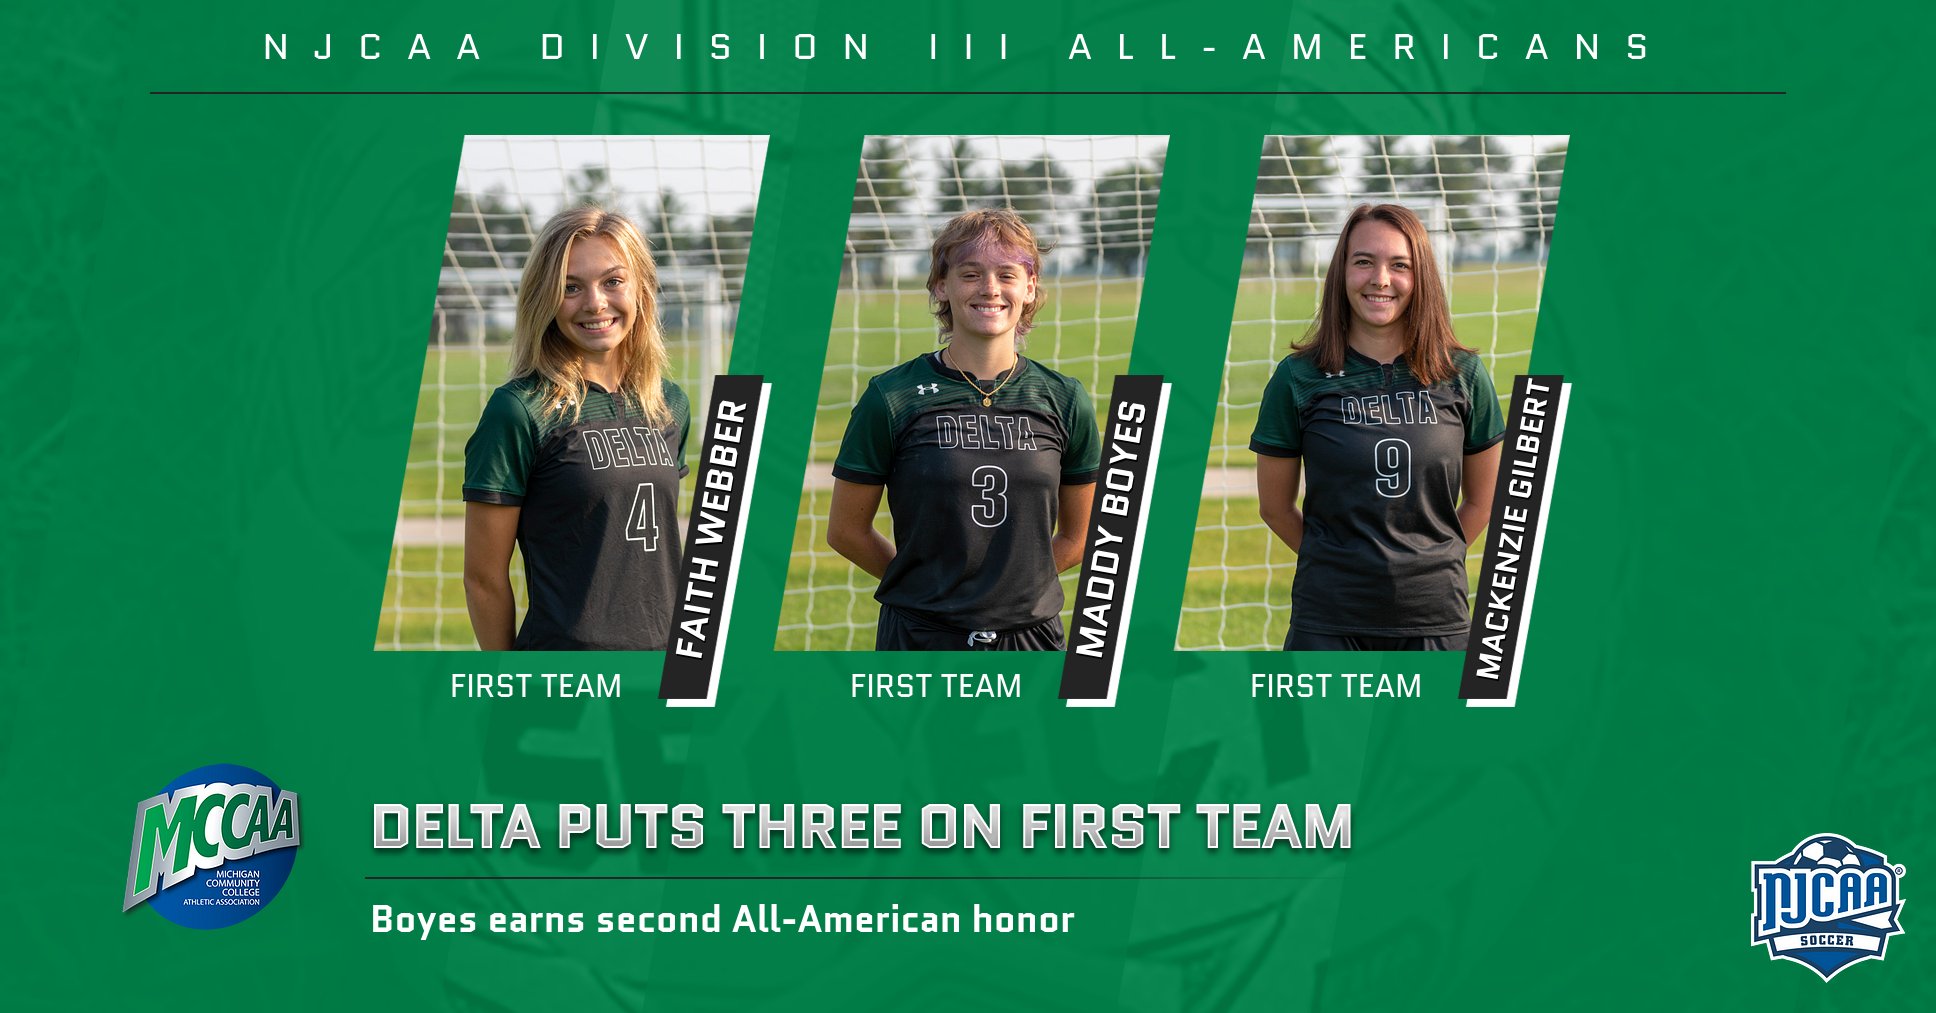 NJCAA Division III Women's Soccer First Team All-Americans, Faith Webber, Maddy Boyes, Mackenzie Gilbert of Delta College